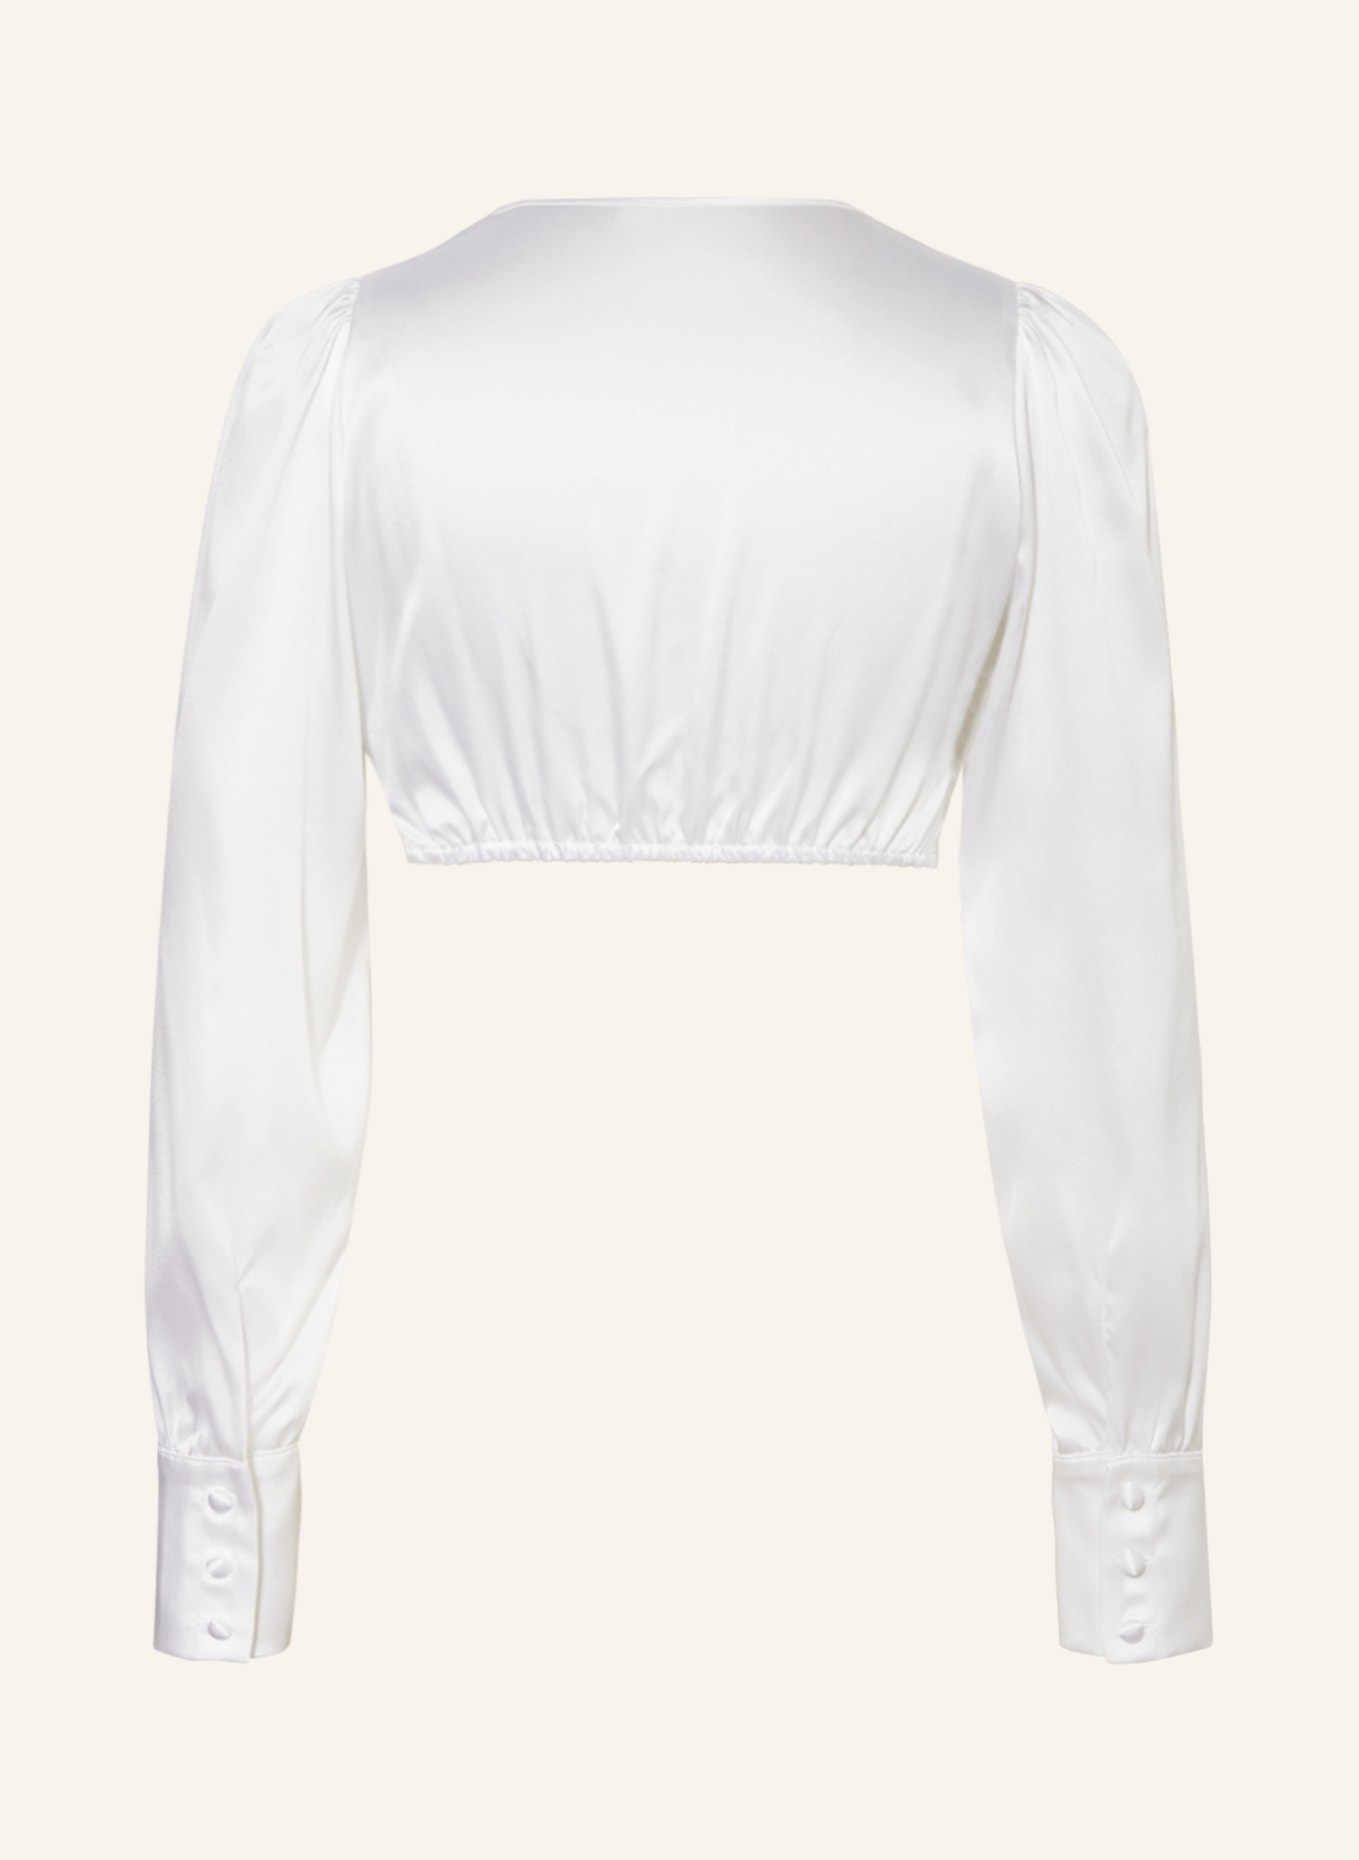 SPORTALM Dirndl blouse made of silk, Color: CREAM (Image 2)